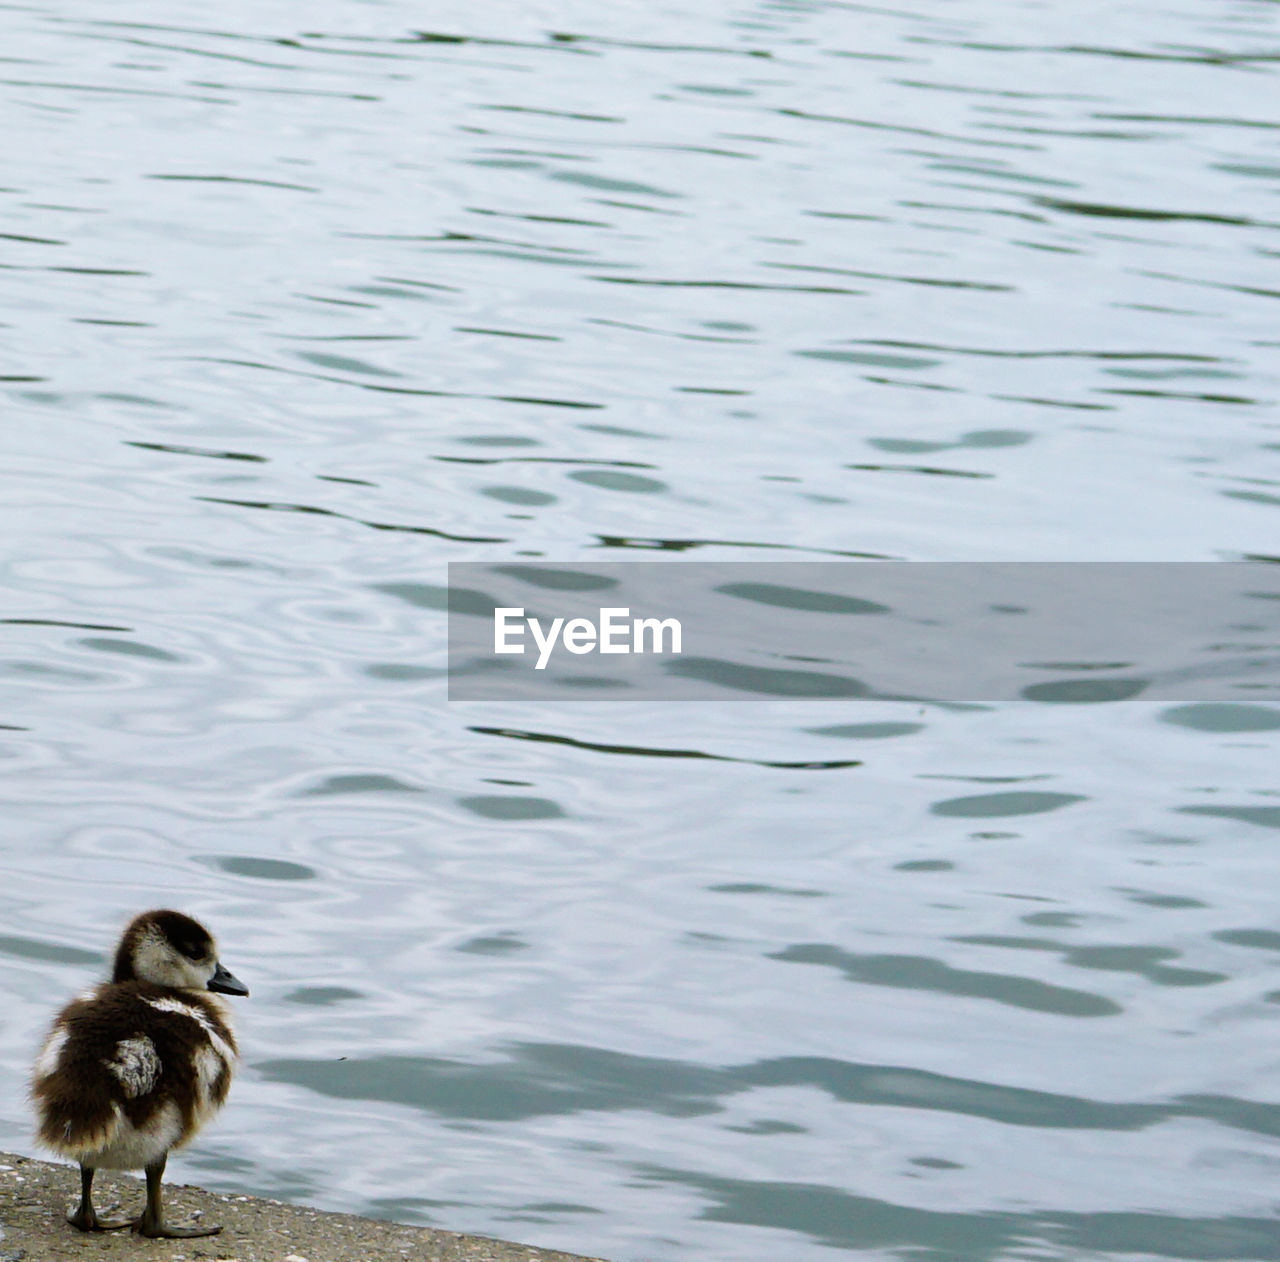 Duckling on pier against lake